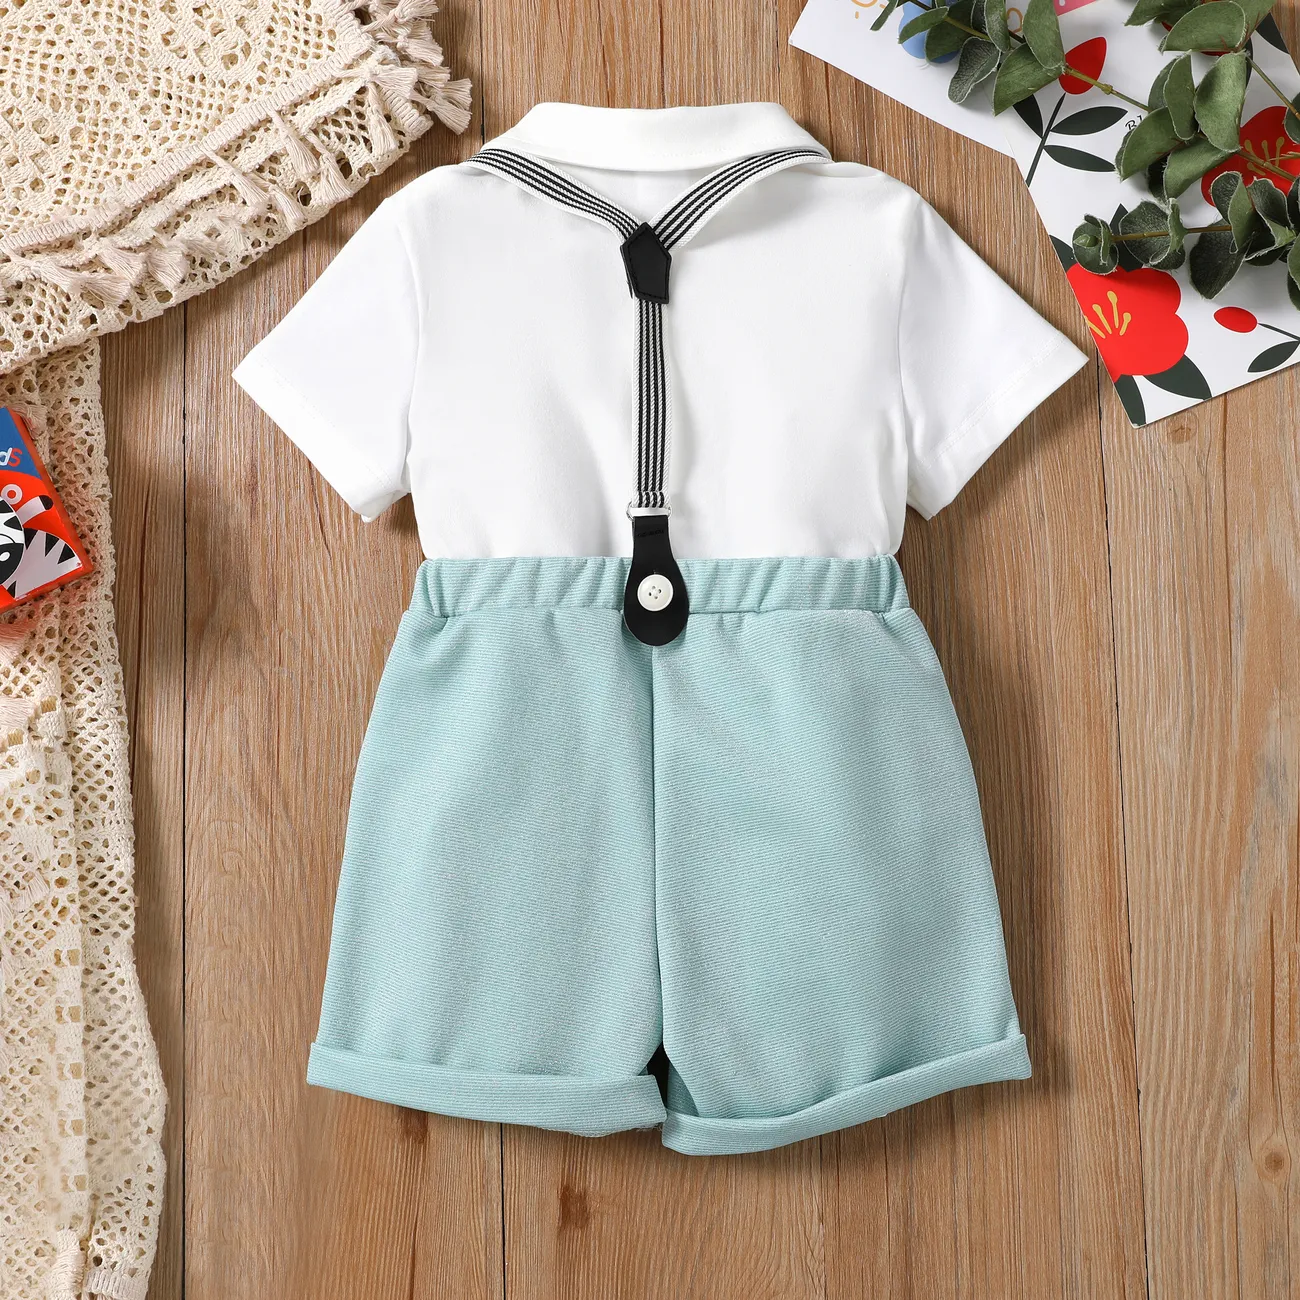 Toddler Boy 3pcs Bowknot Shirt and Shorts with Detachable Strap Set Blue big image 1